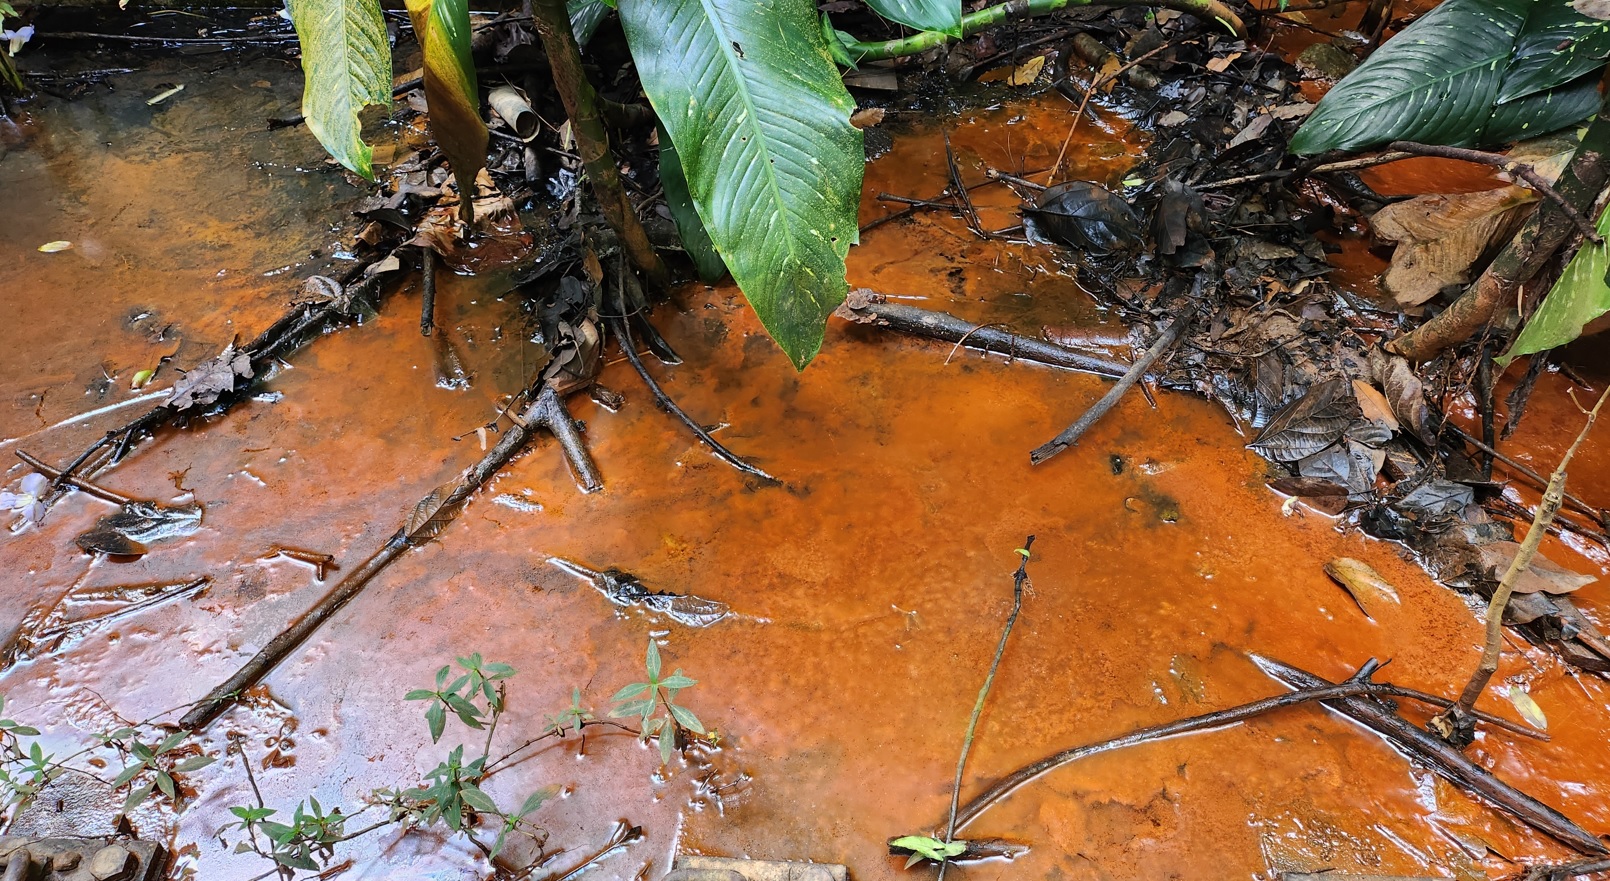 Muddy stream that looks like teh tarik